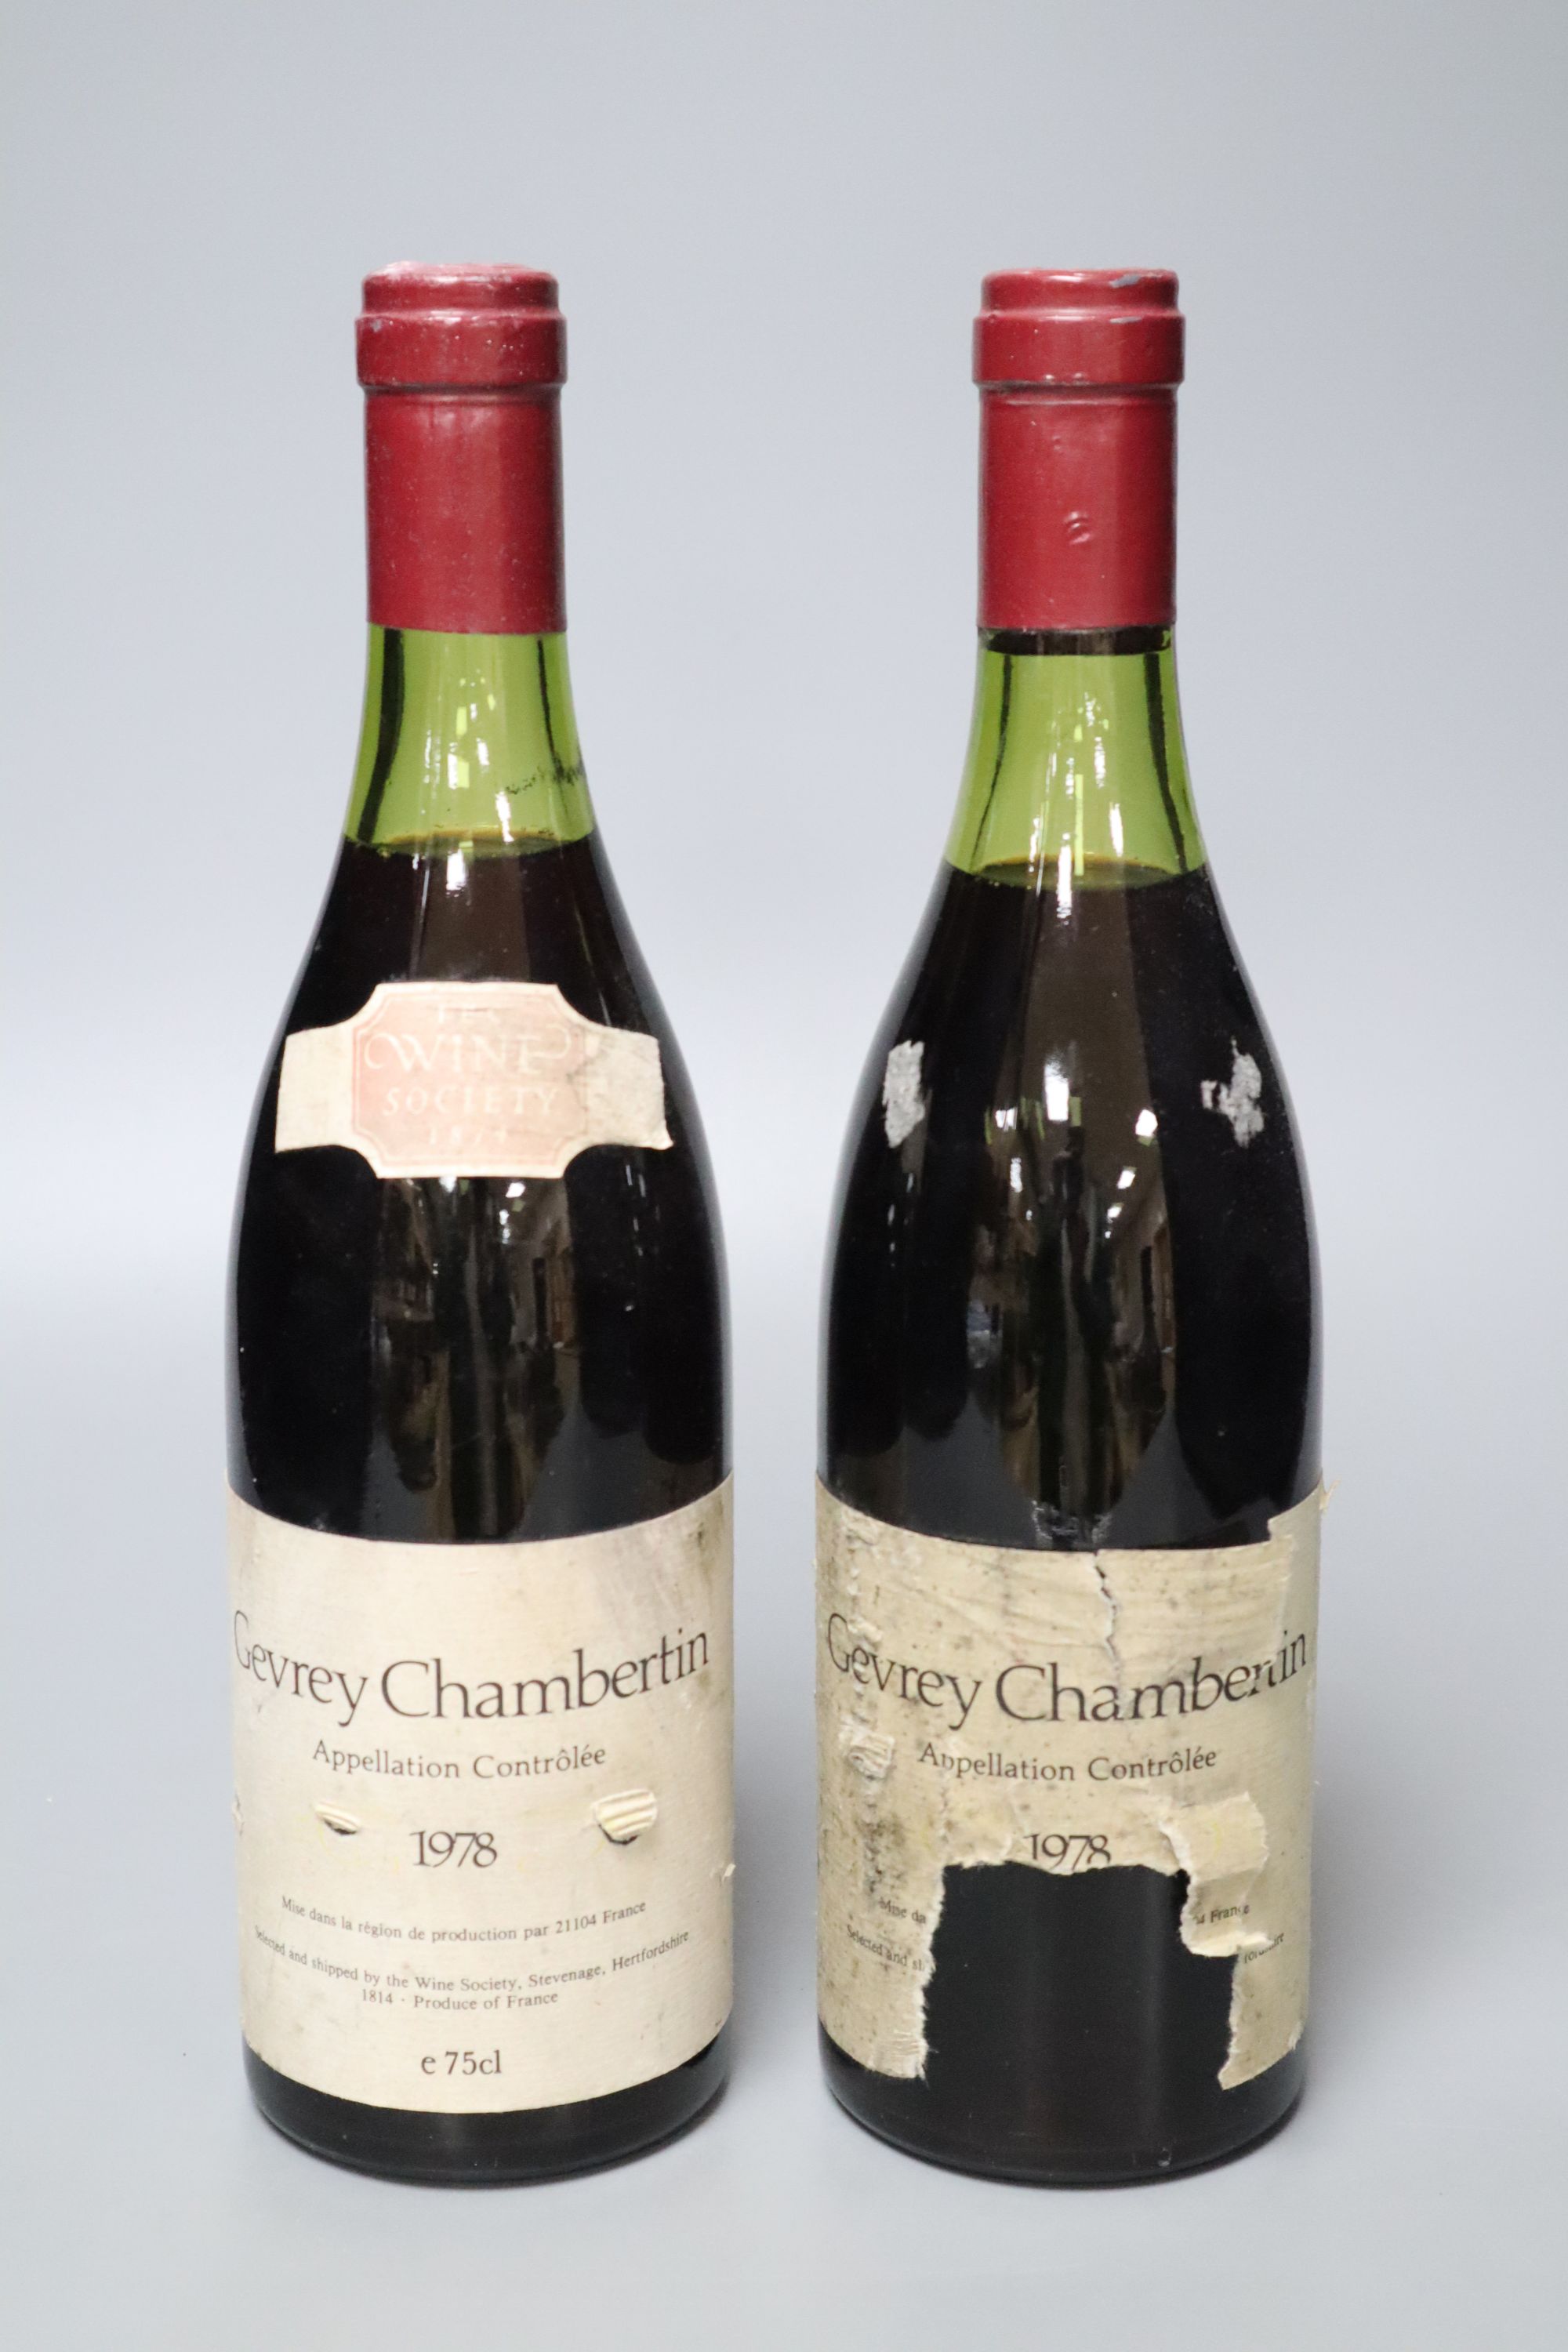 Two bottles of Gevrey Chambertin 1978